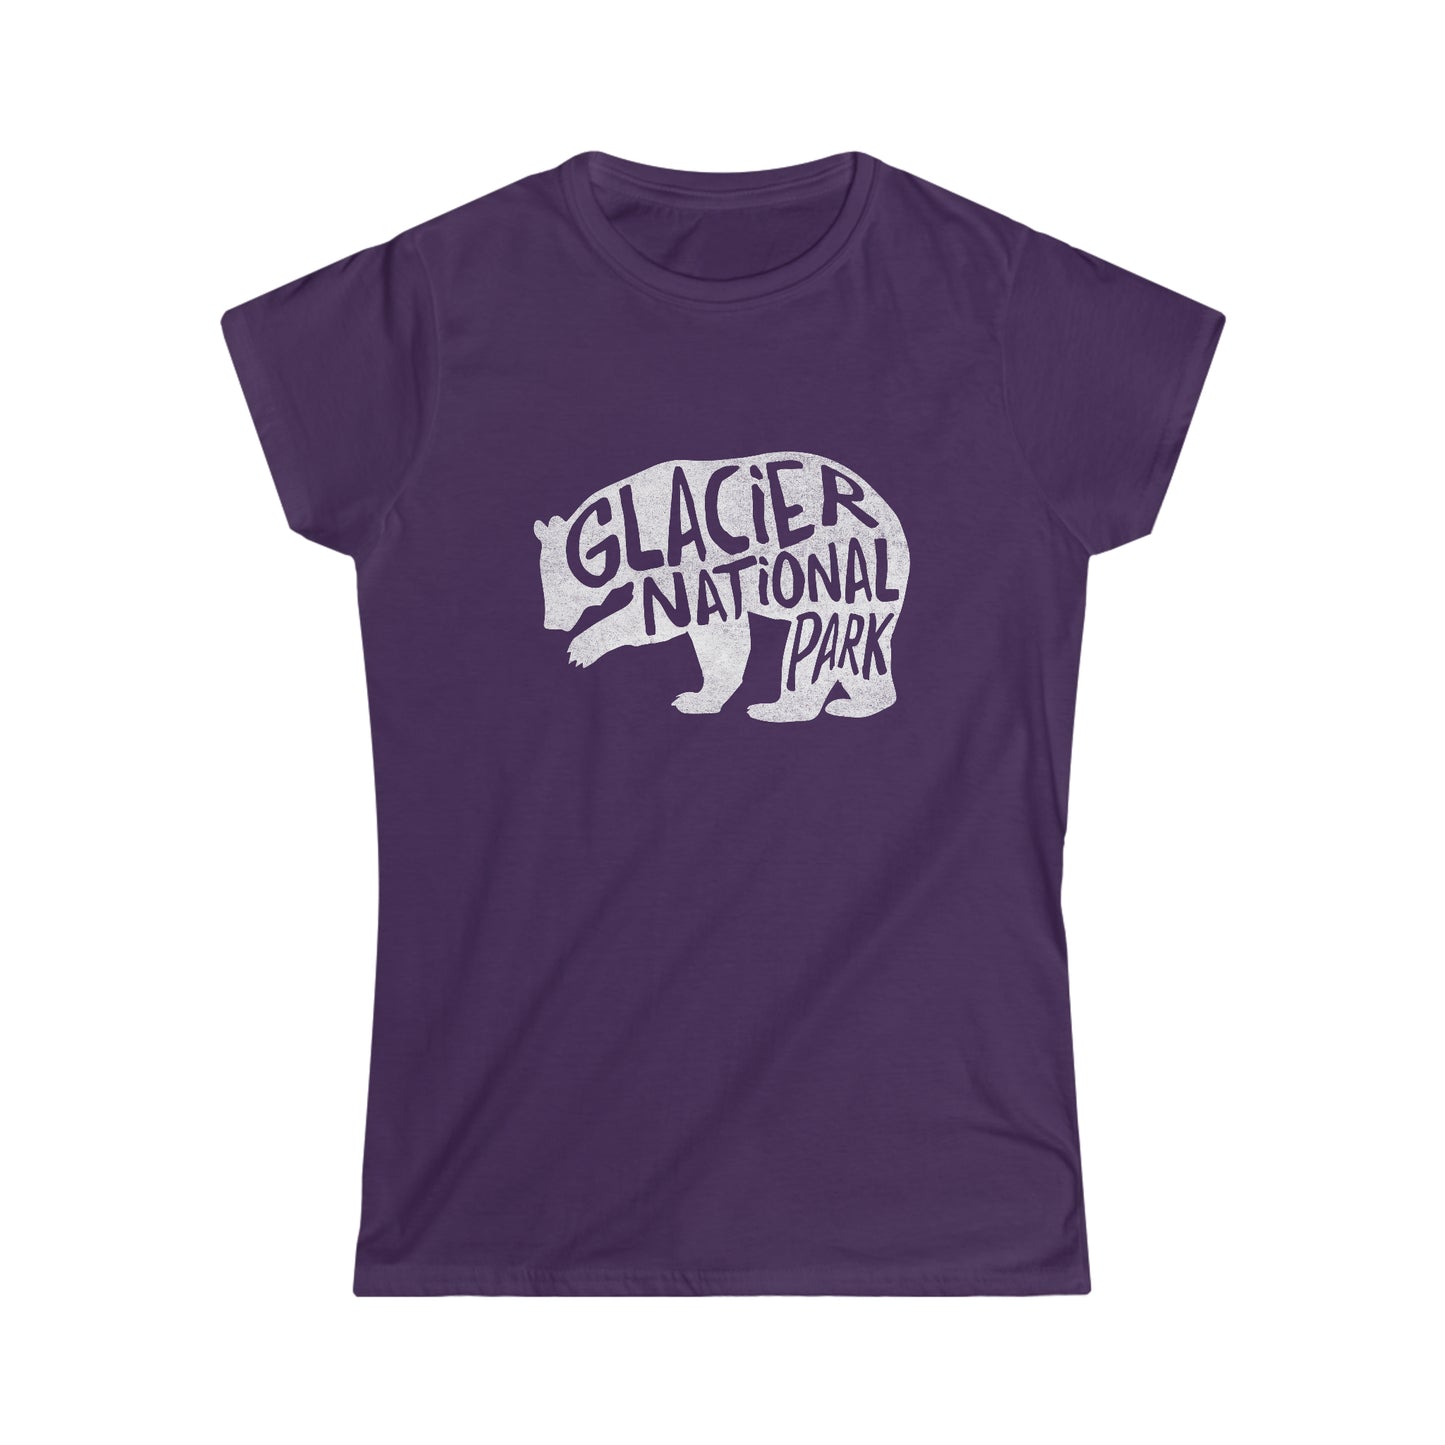 Glacier National Park Women's T-Shirt - Grizzly Bear